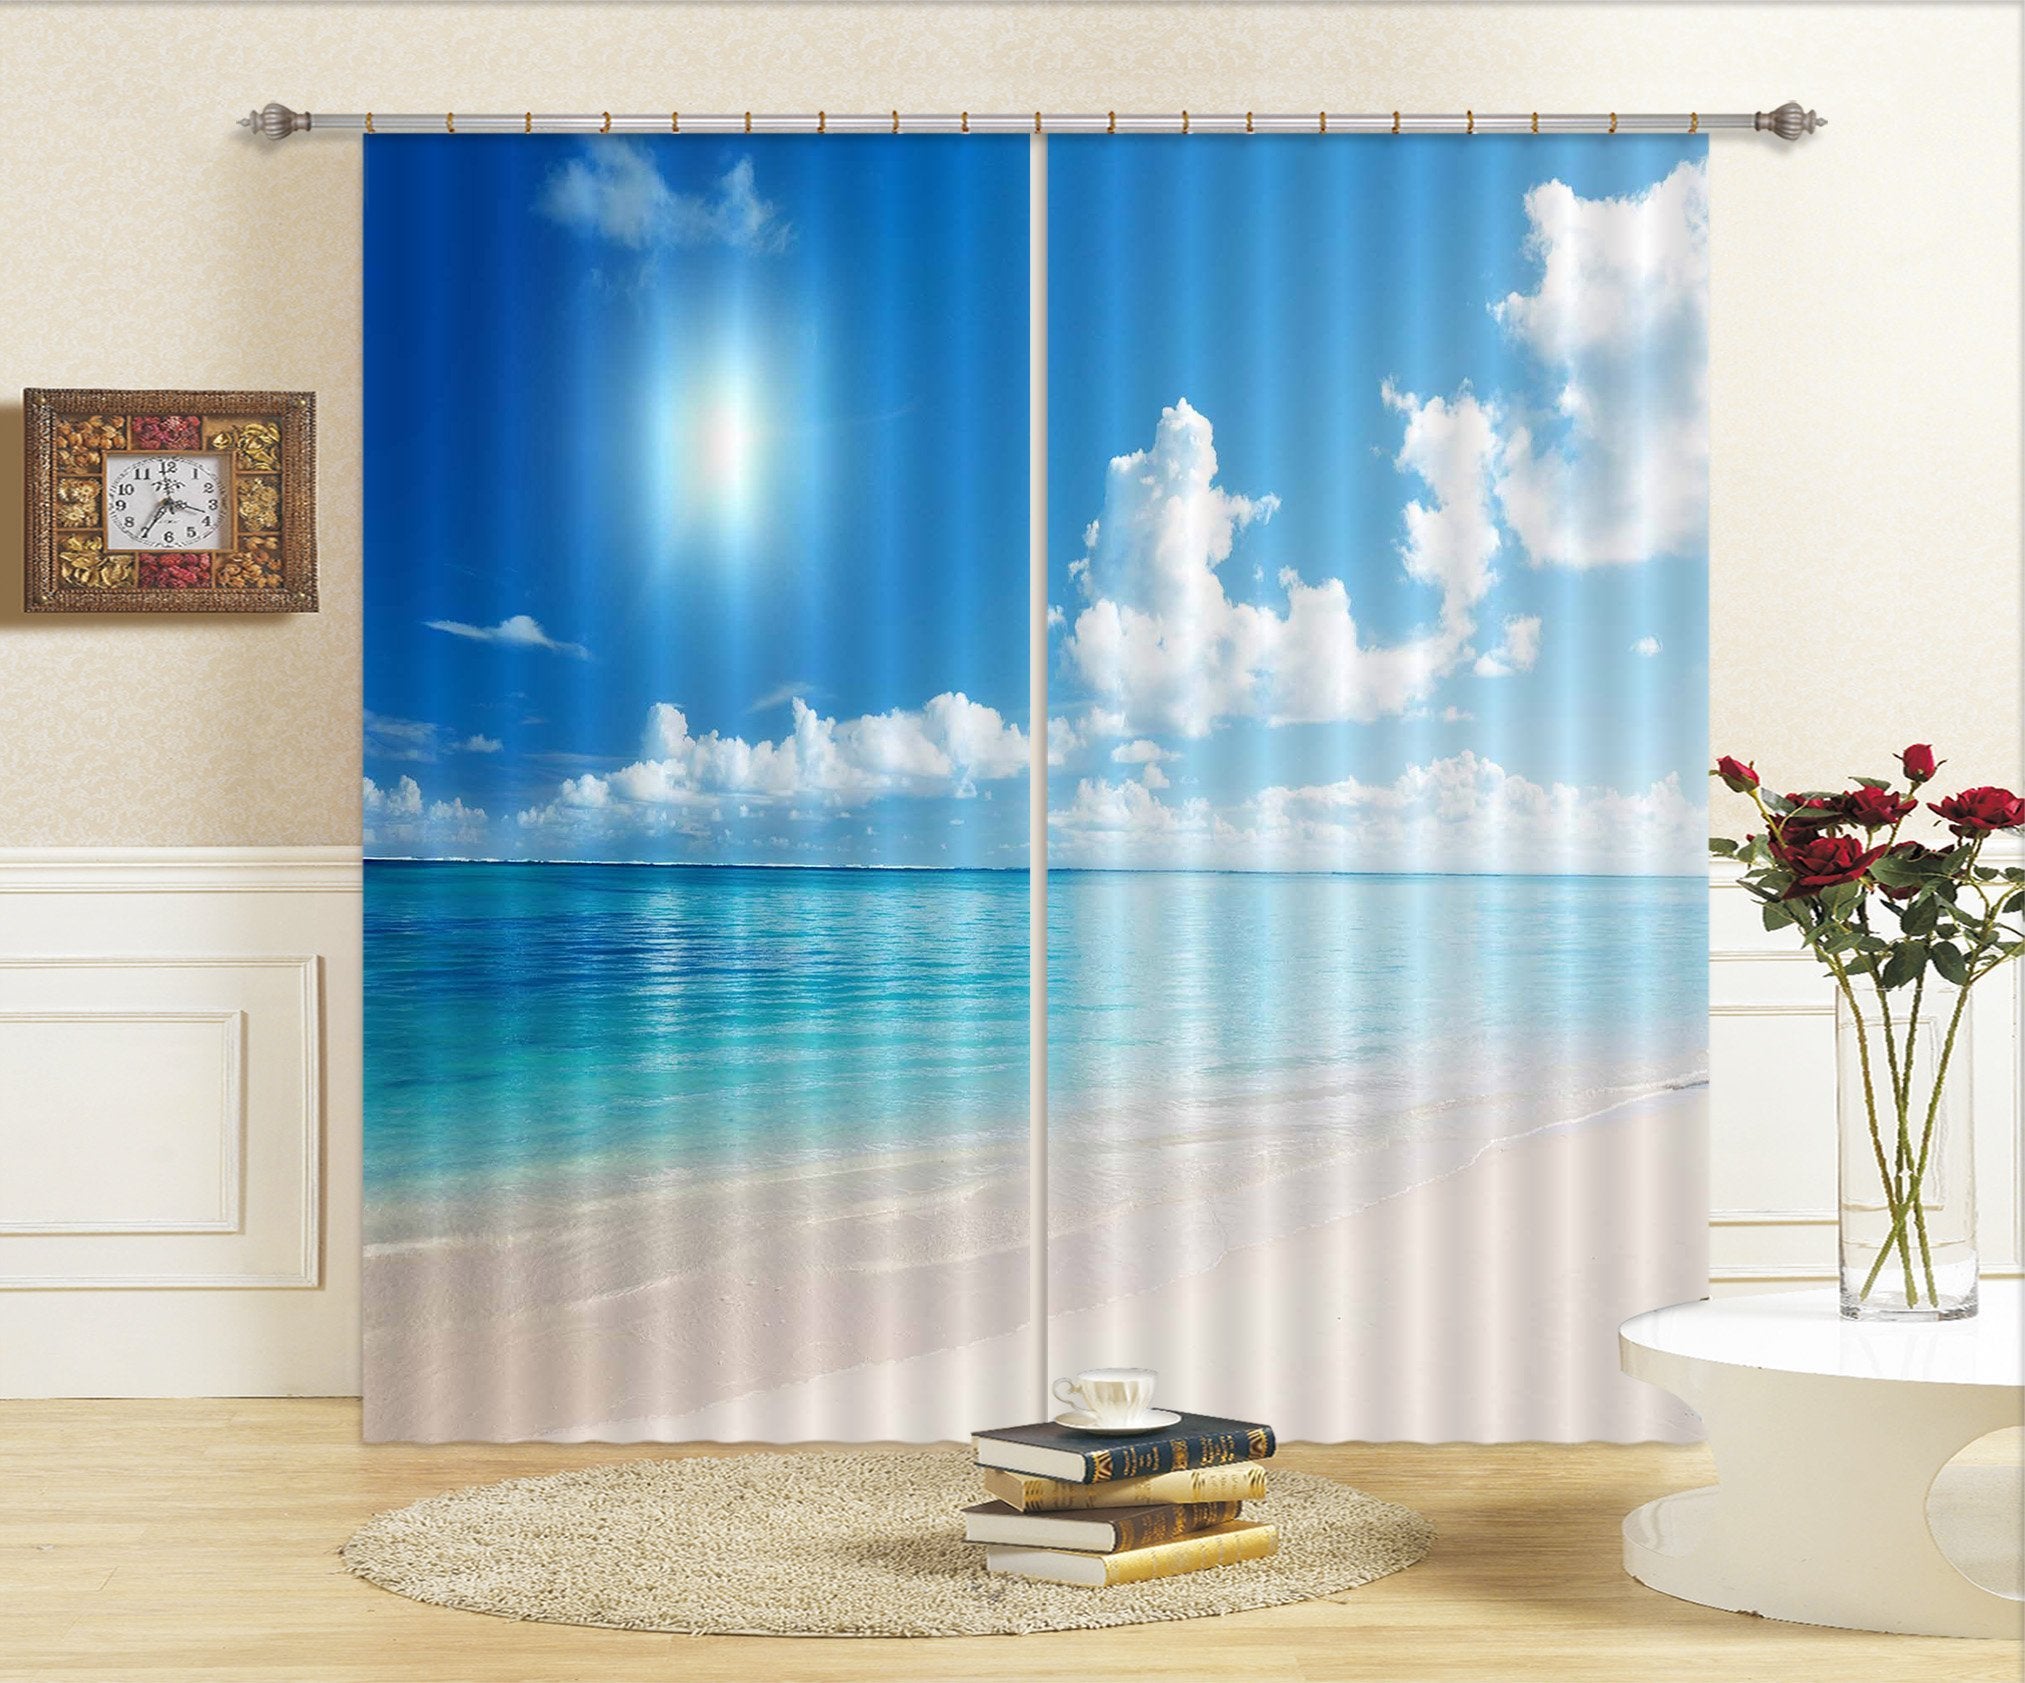 3D Sunny Sea Scenery 2265 Curtains Drapes Wallpaper AJ Wallpaper 